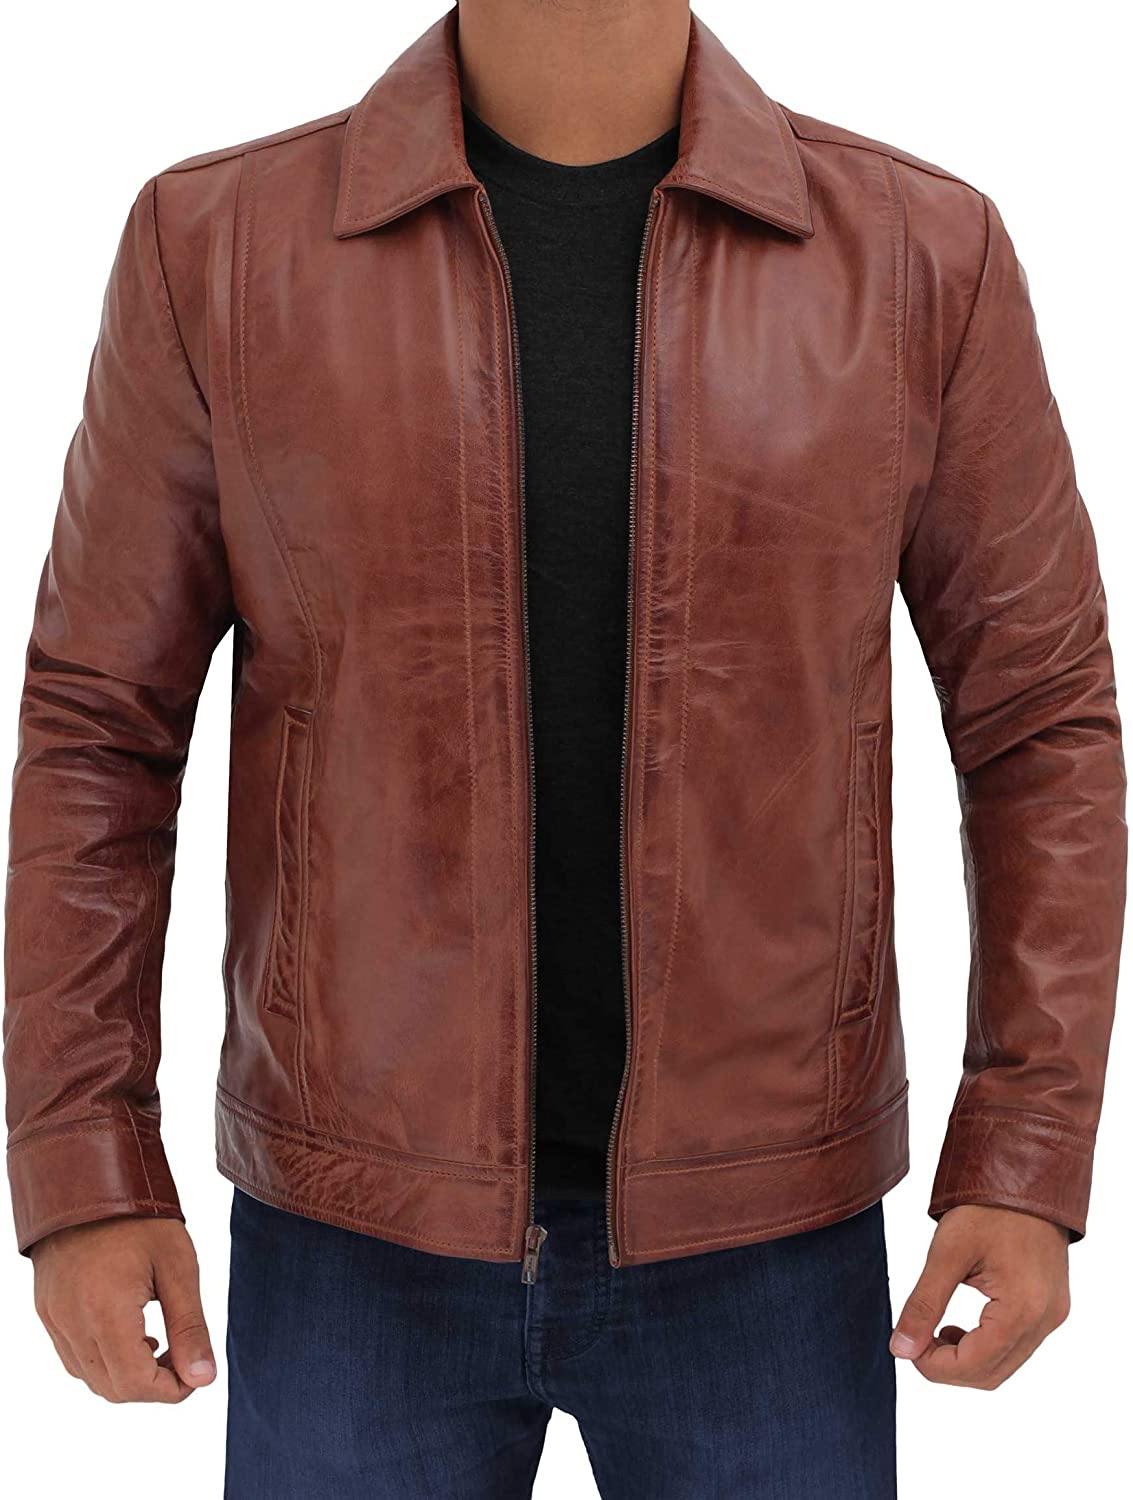 Brown Real Lambskin Leather Jacket Men Black Leather Coats for Men